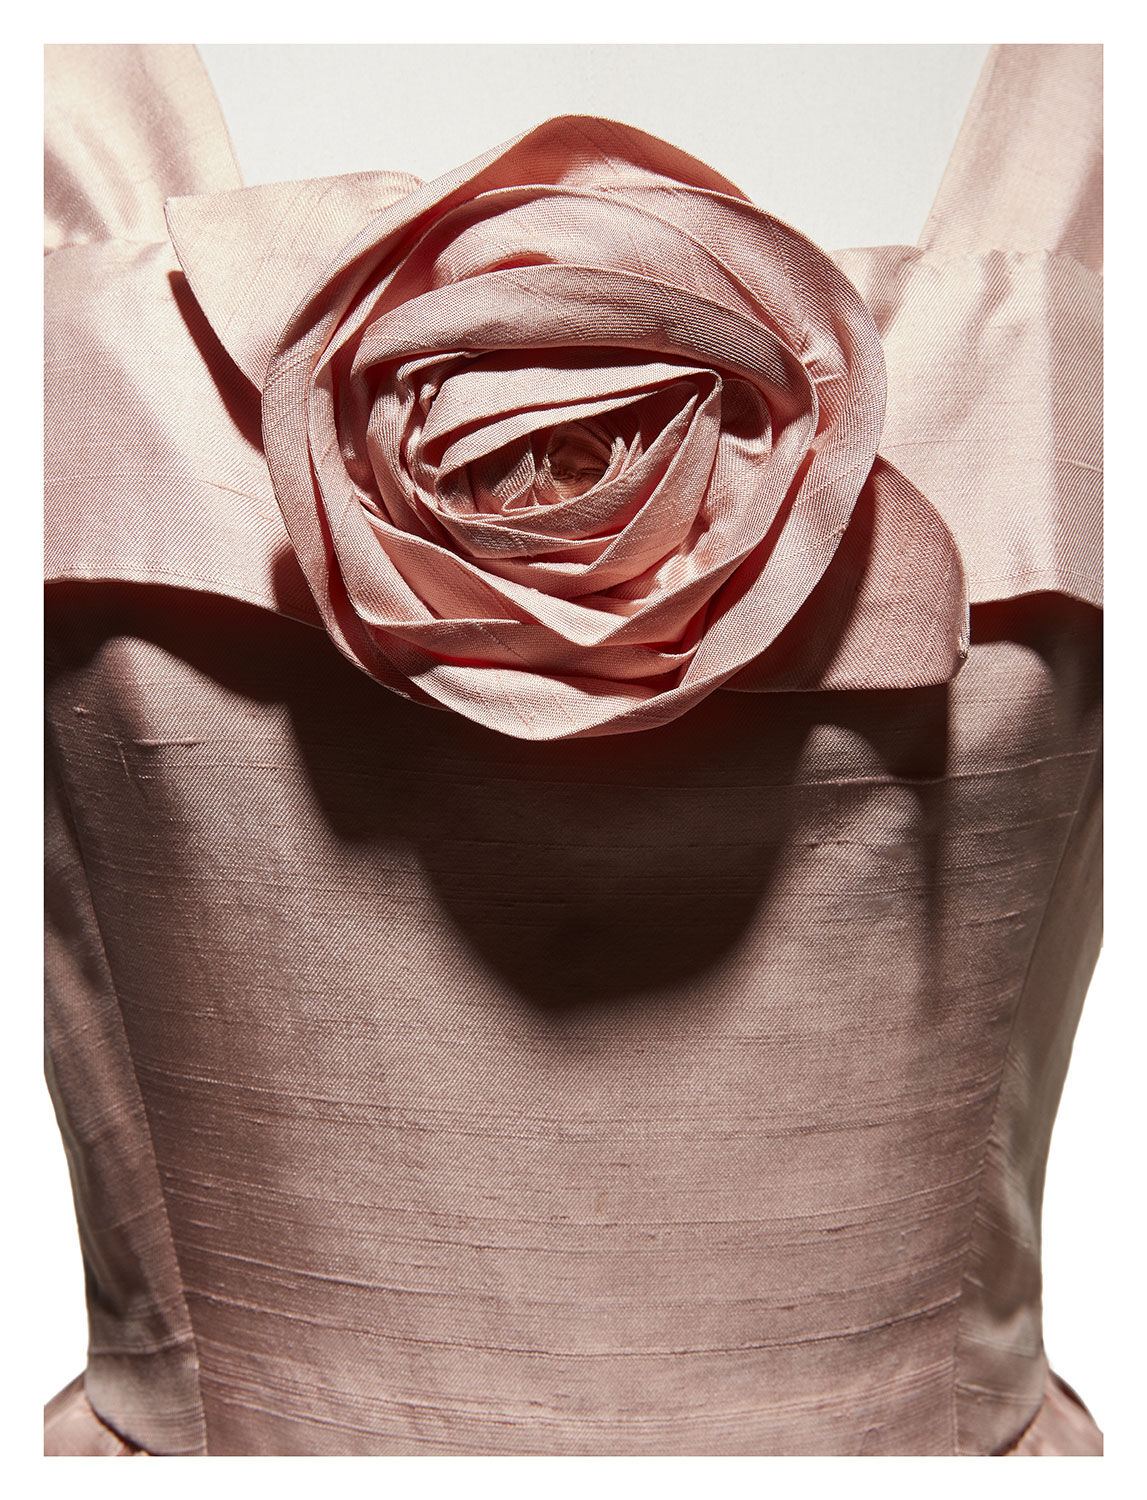 Dior and Roses - Triển lãm hoa hồng trong thế giới thời trang Dior-4